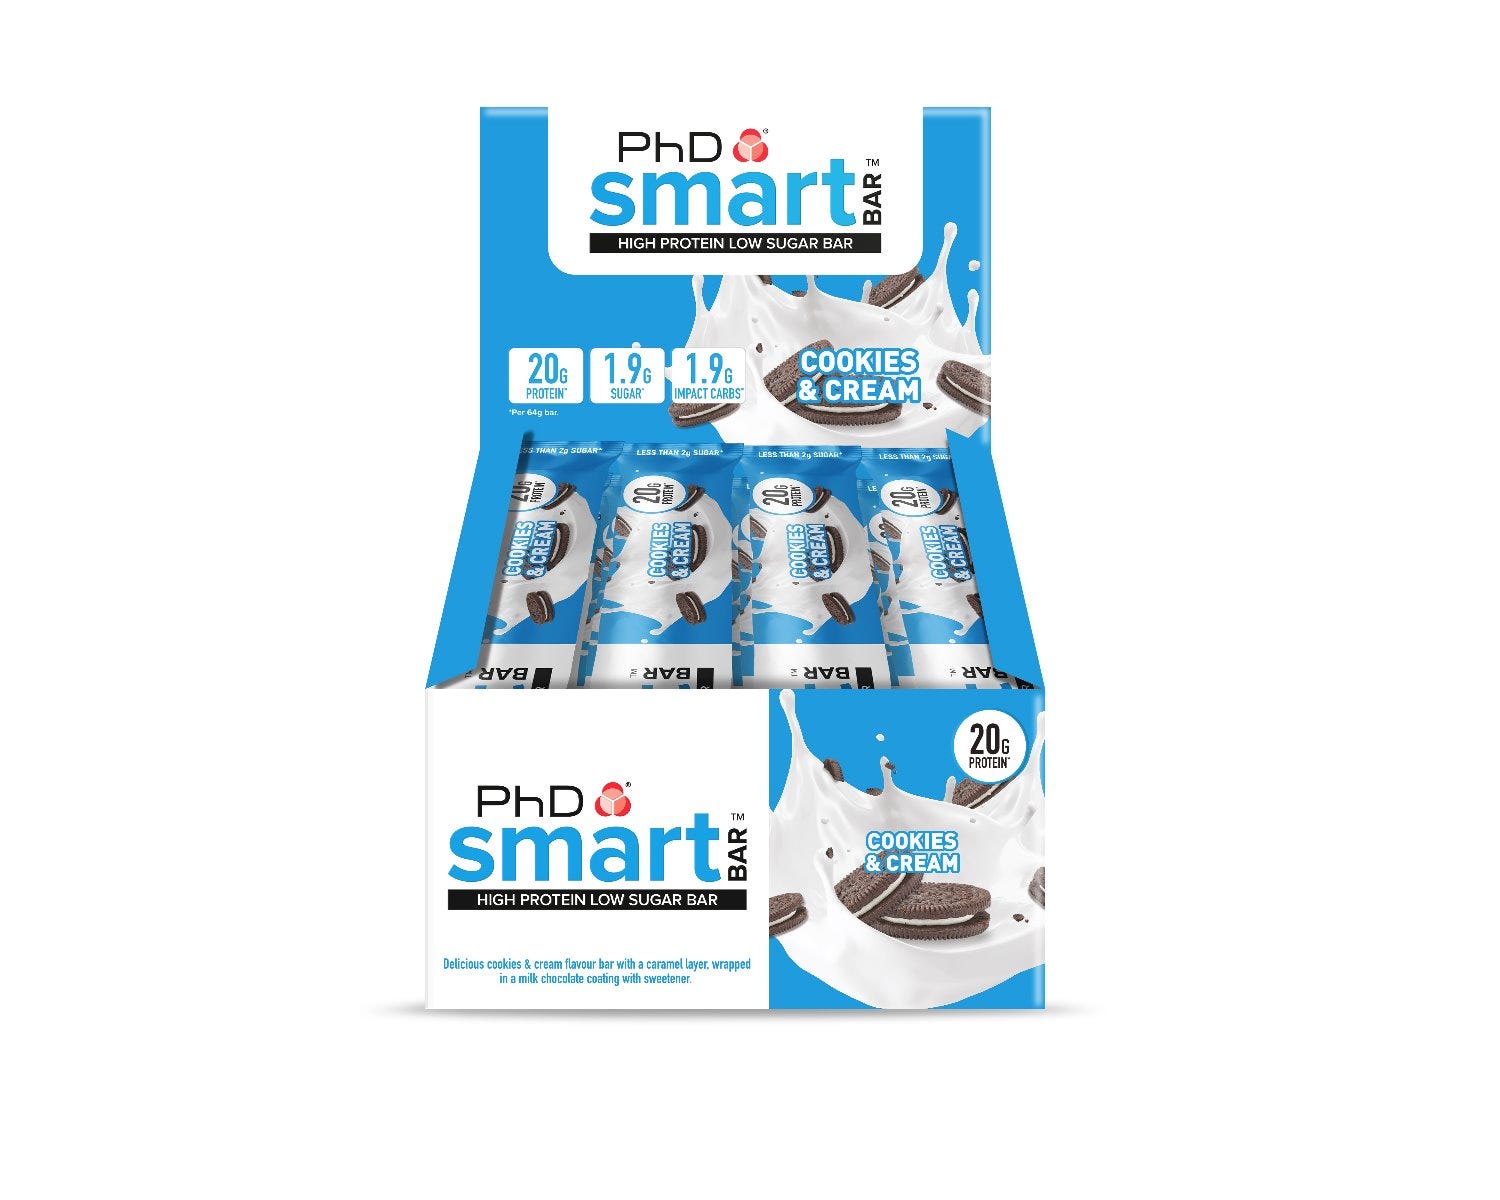 PHD Smart Bar – Cookies & Cream Review